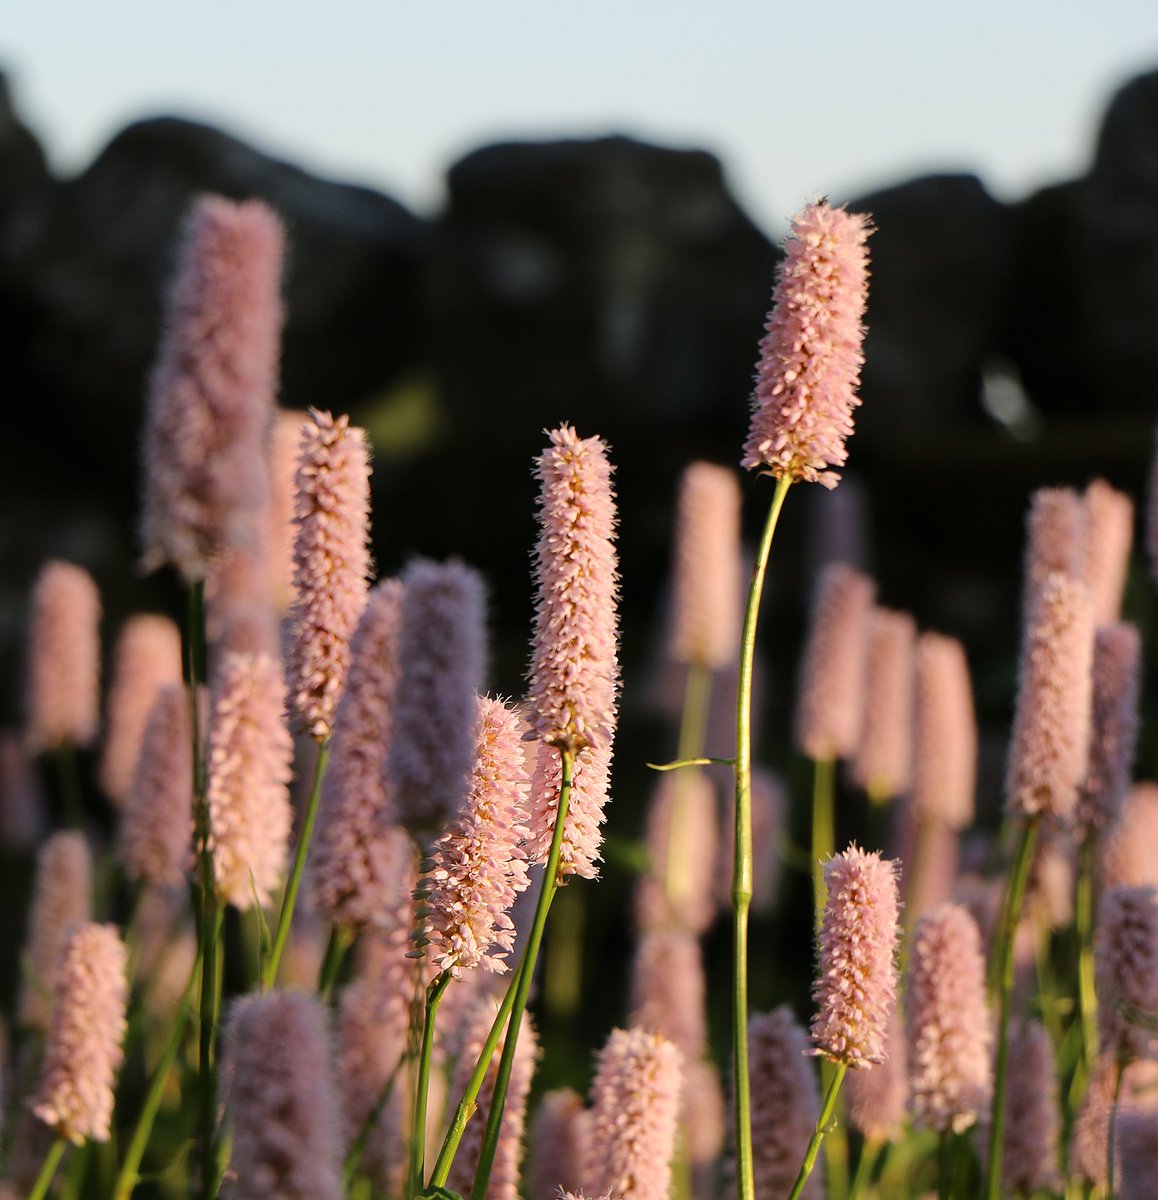 Persicaria bistorta ‘Superba’ in the low sun of a long June evening.

#gardenshour #scottishgarden